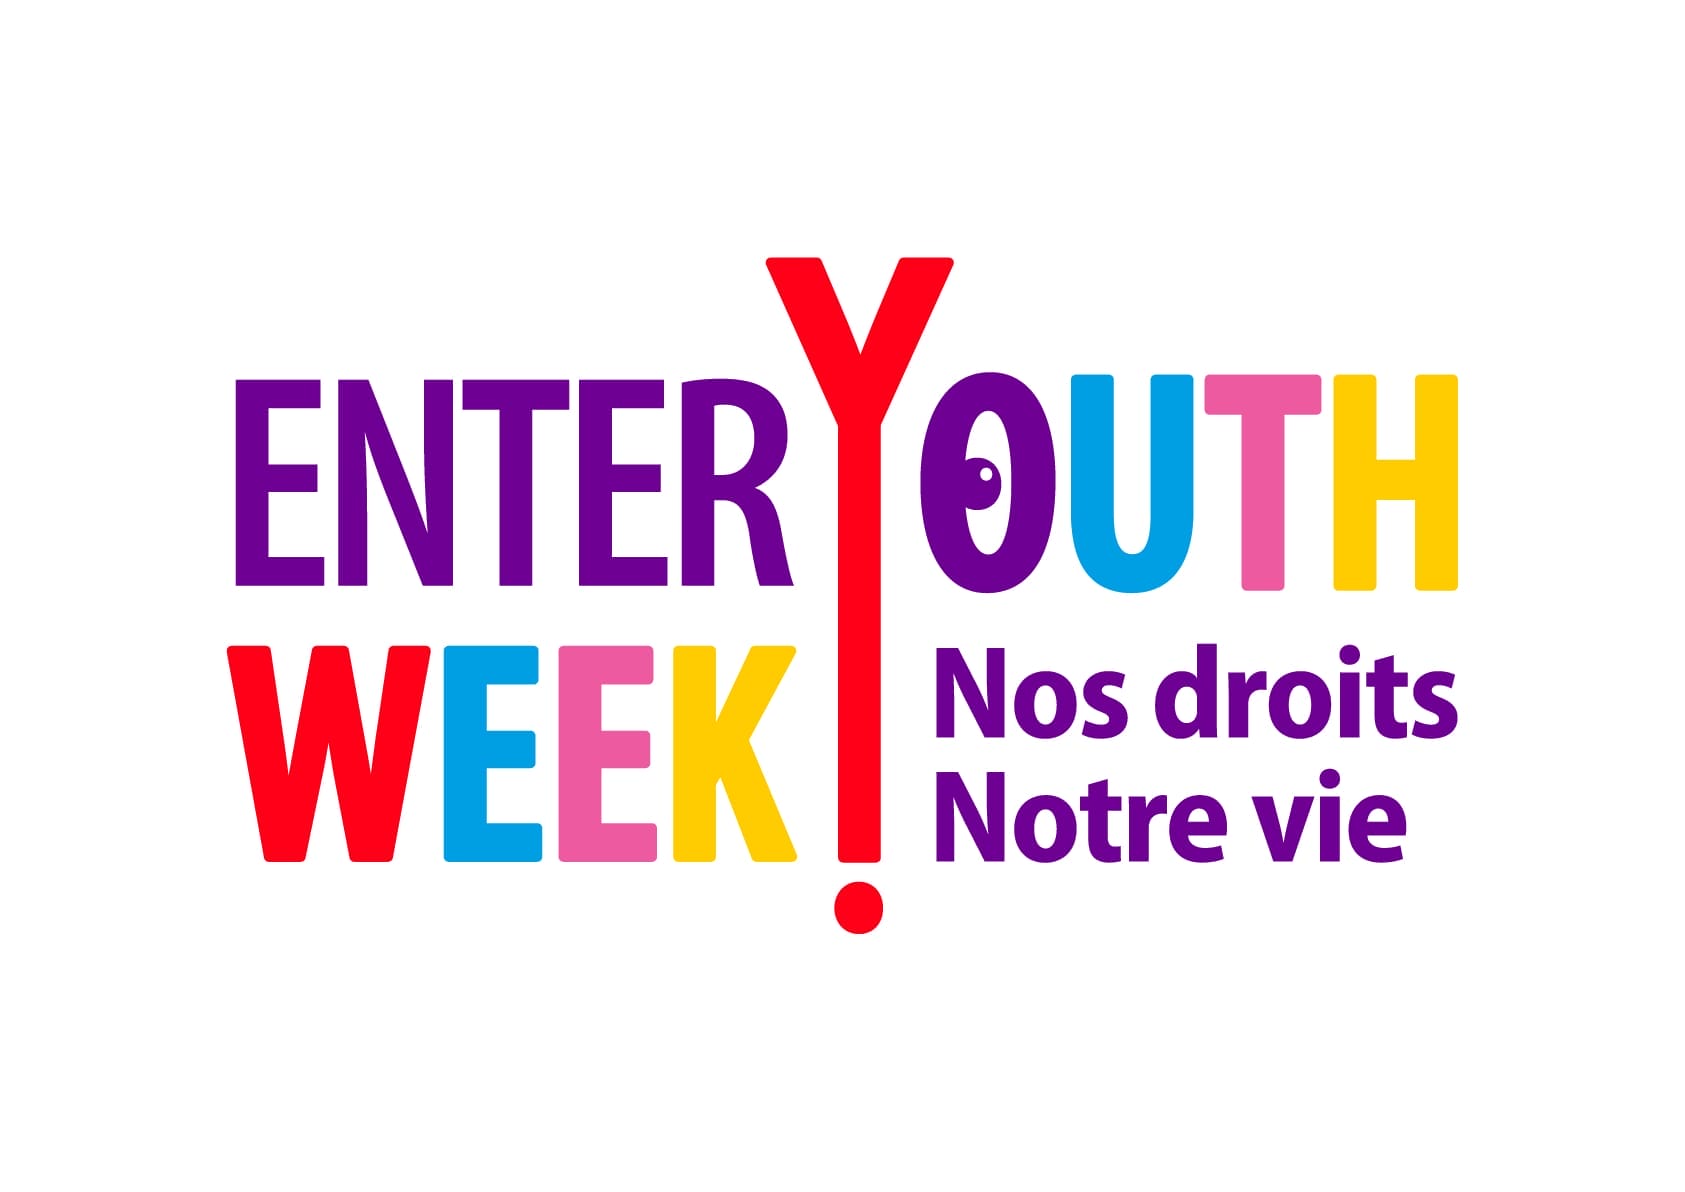 Enter-youth-week